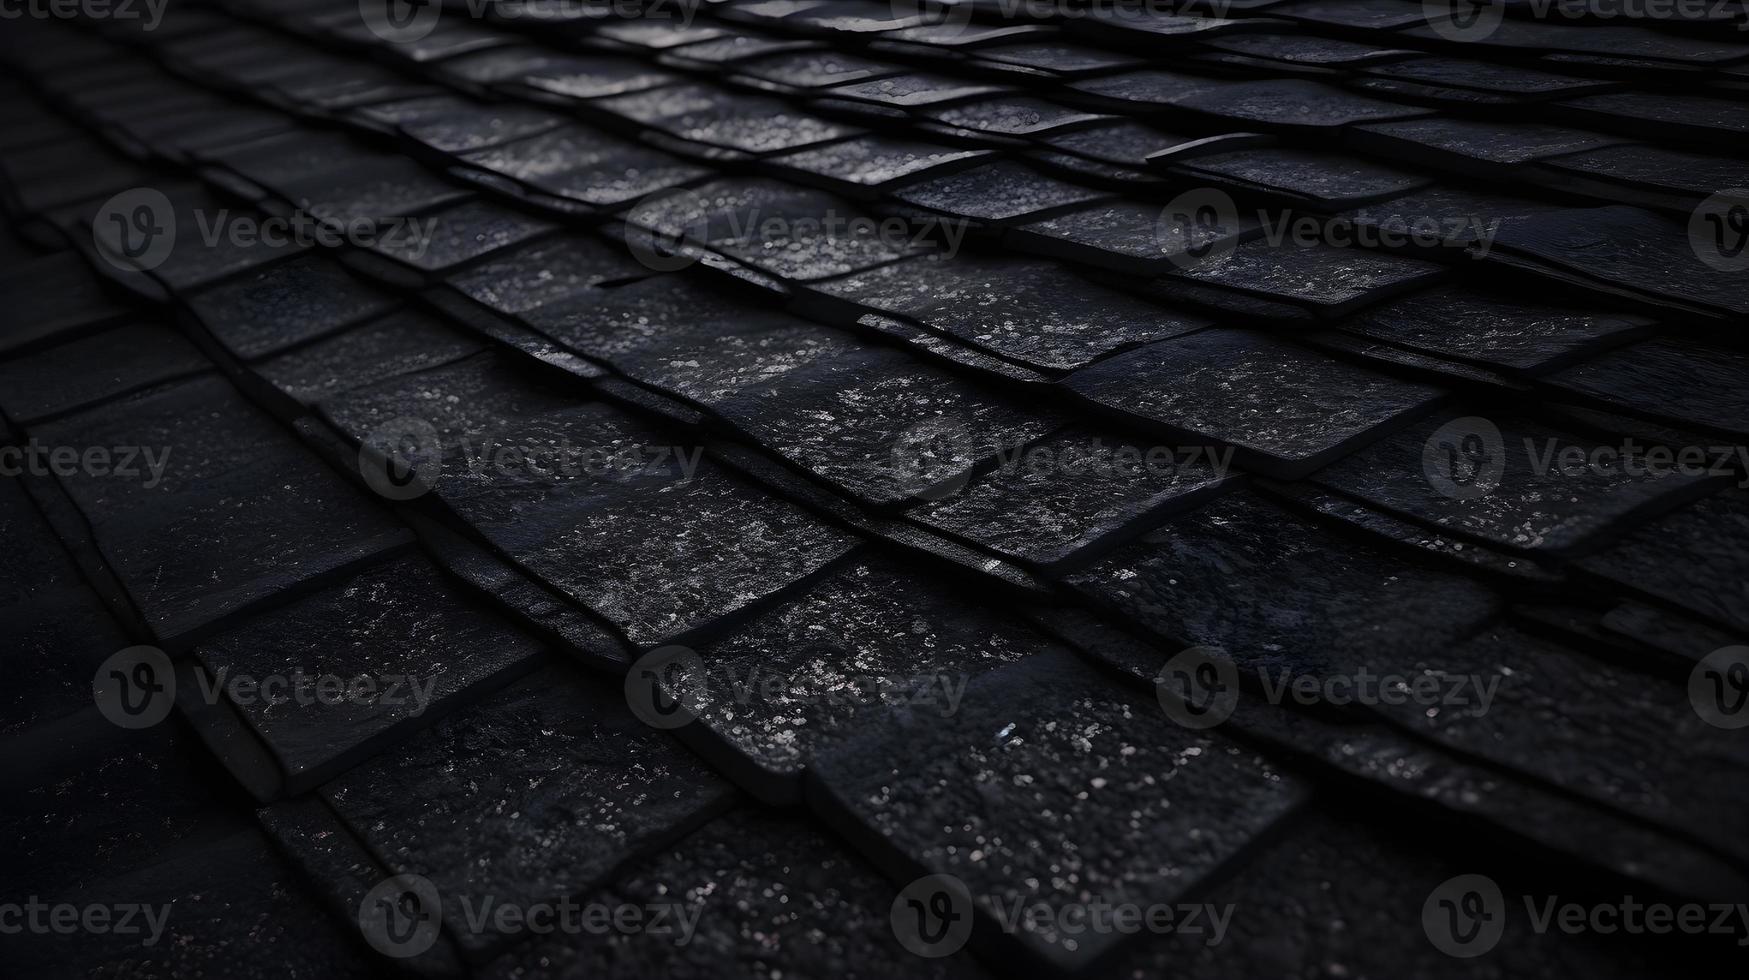 Preto coberturas asfalto textura fundo foto